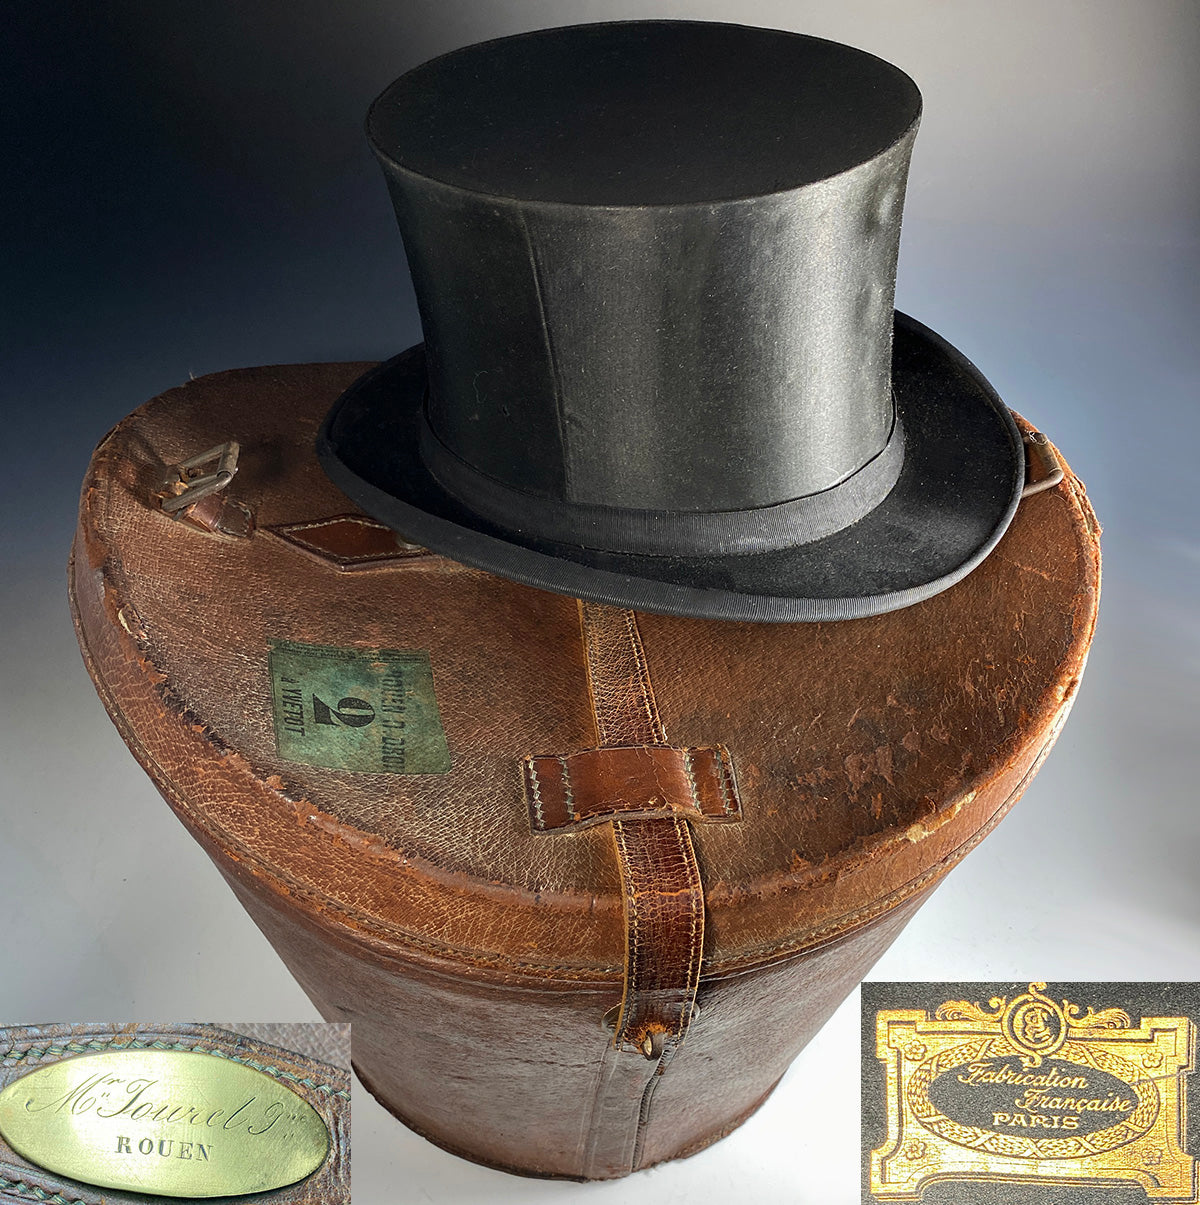 Antique Leather Hat Box